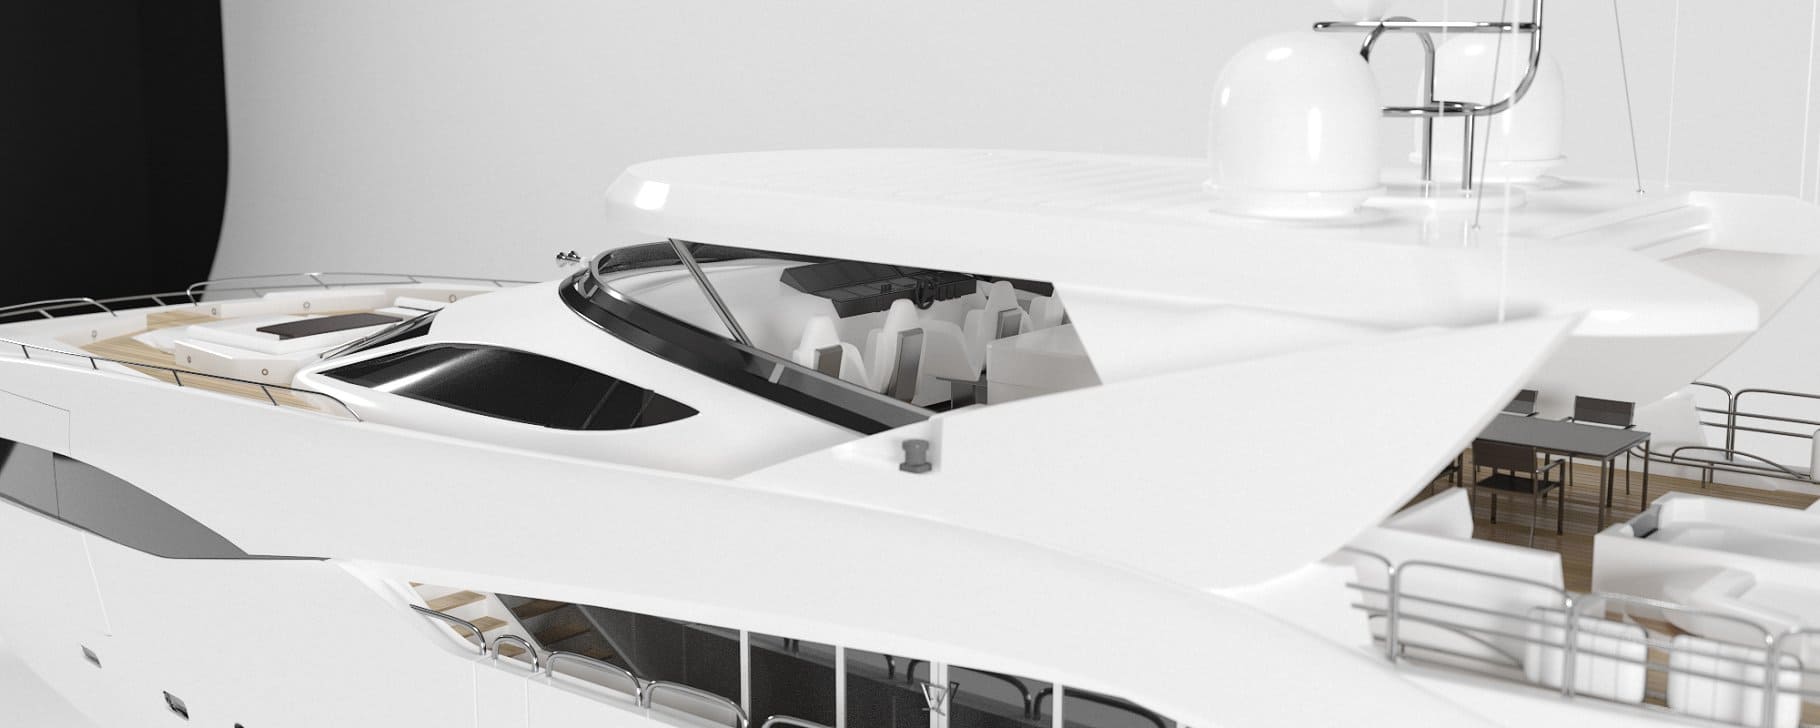 Side view of the white Sunseeker predator 130 Superyacht model.